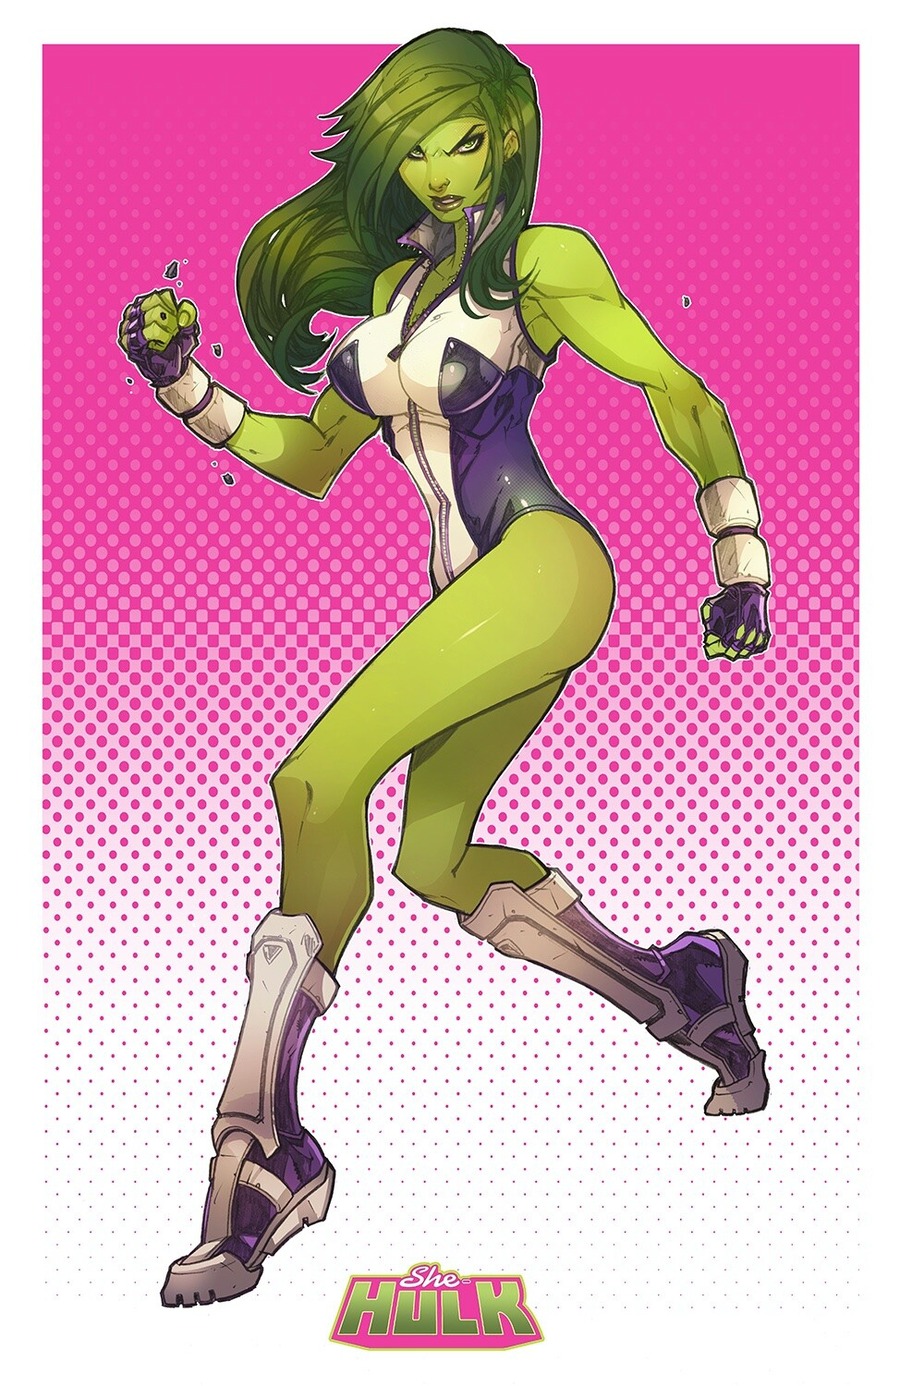 She-Hulk - Marvel Snap Cards